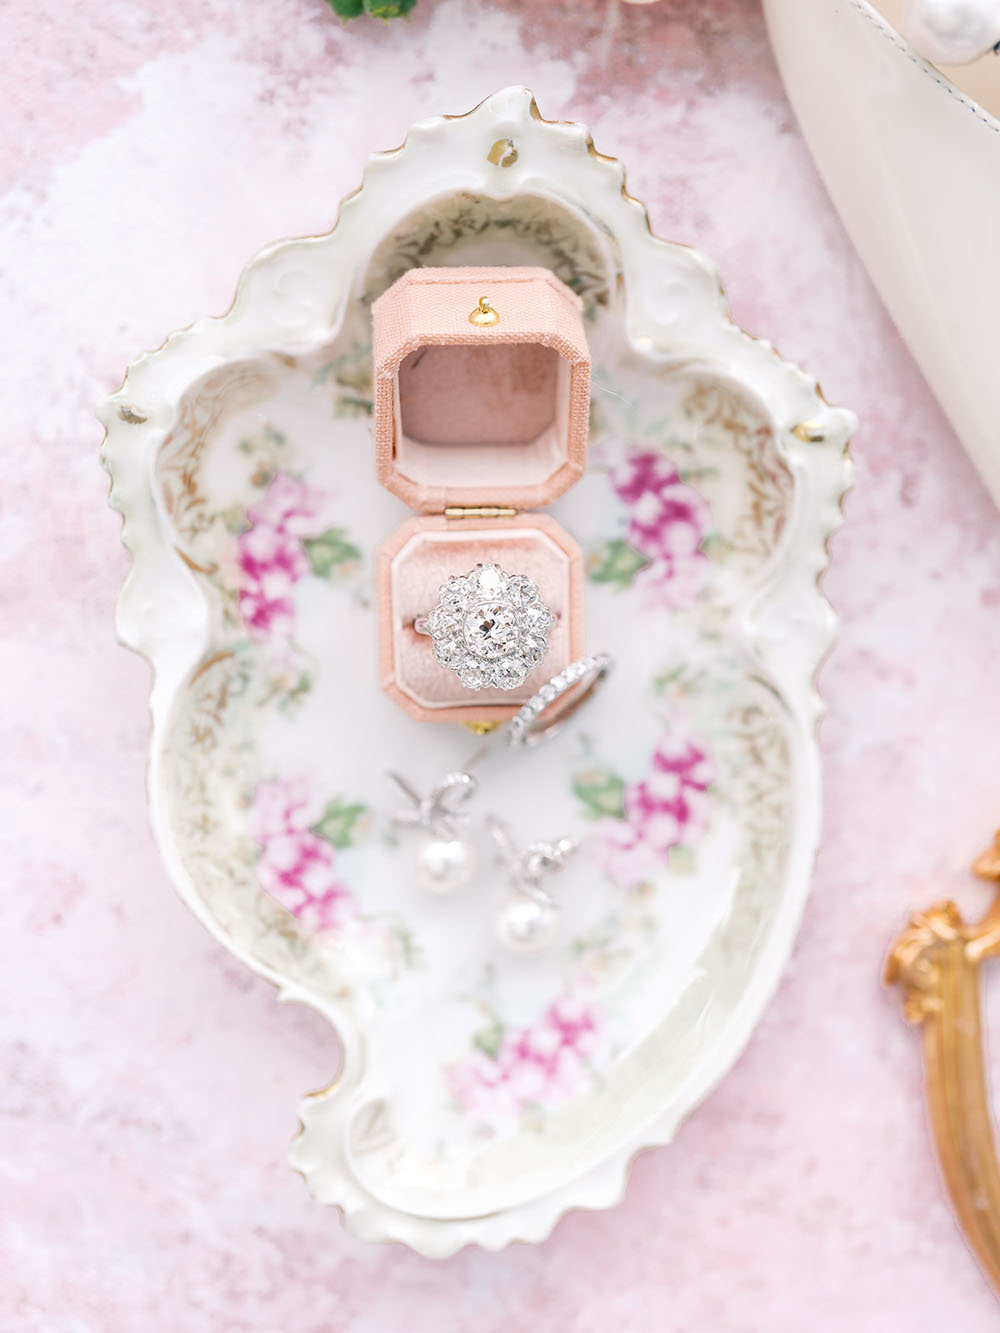 wedding ring and pink ring box